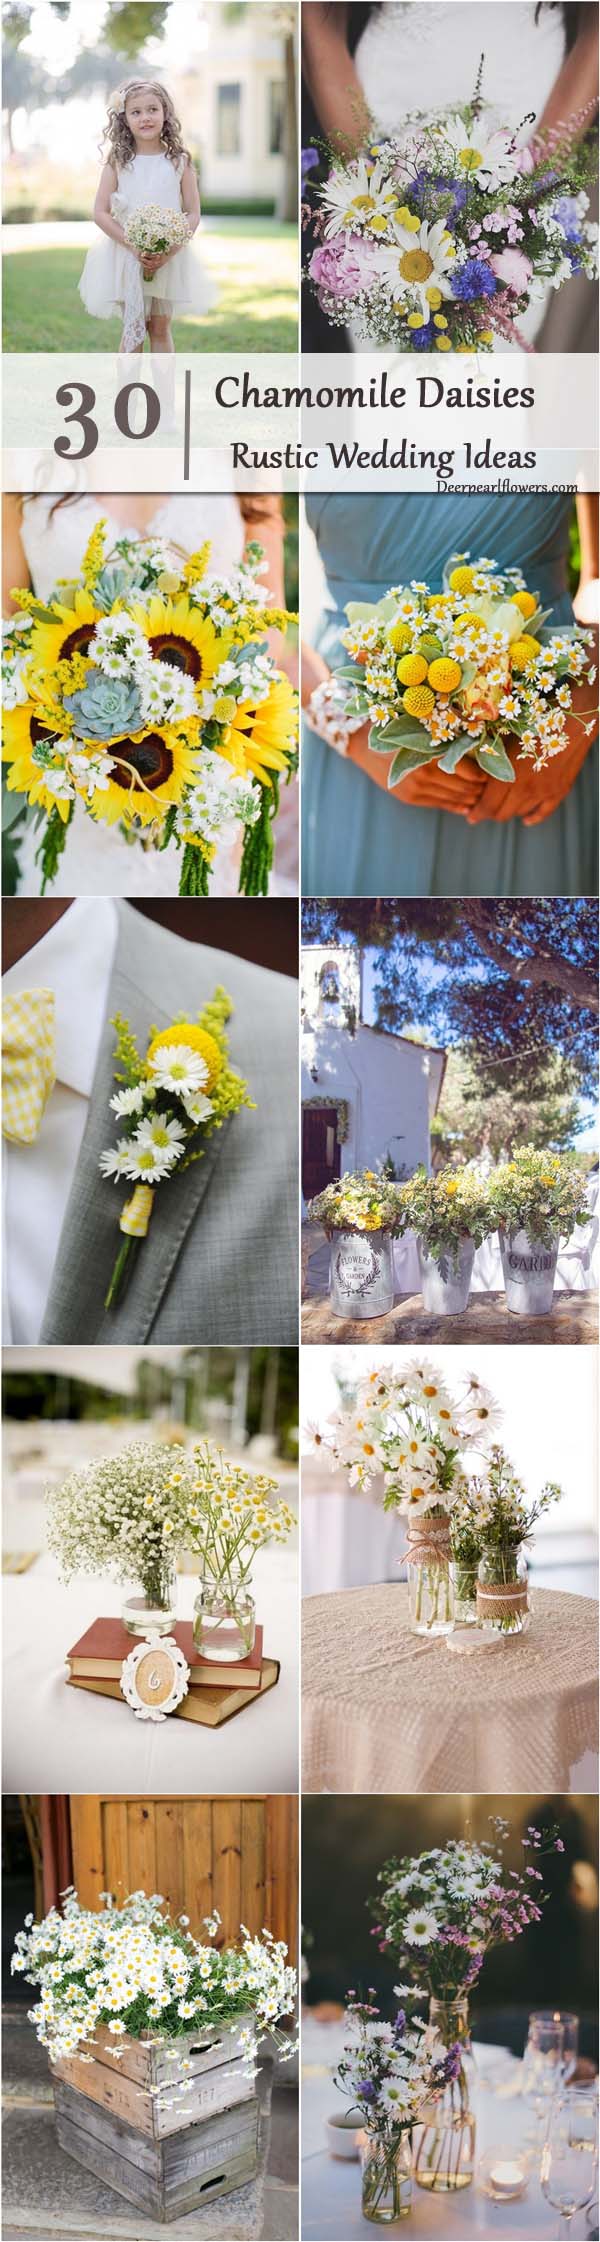 rustic wedding ideas- chamomile daisies wedding ideas